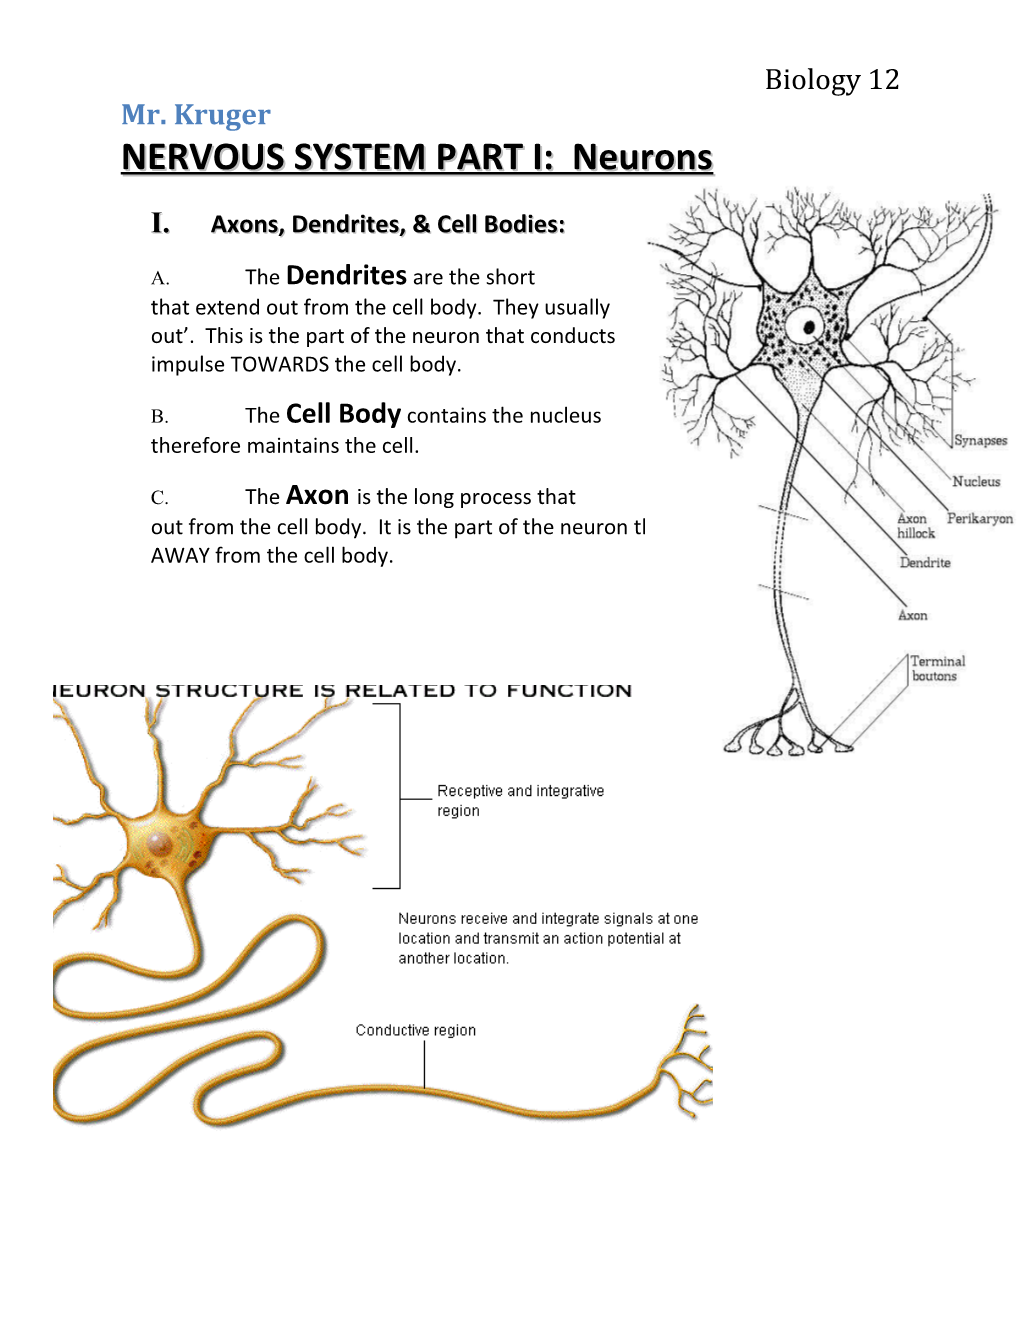 NERVOUS SYSTEM PART I: Neurons